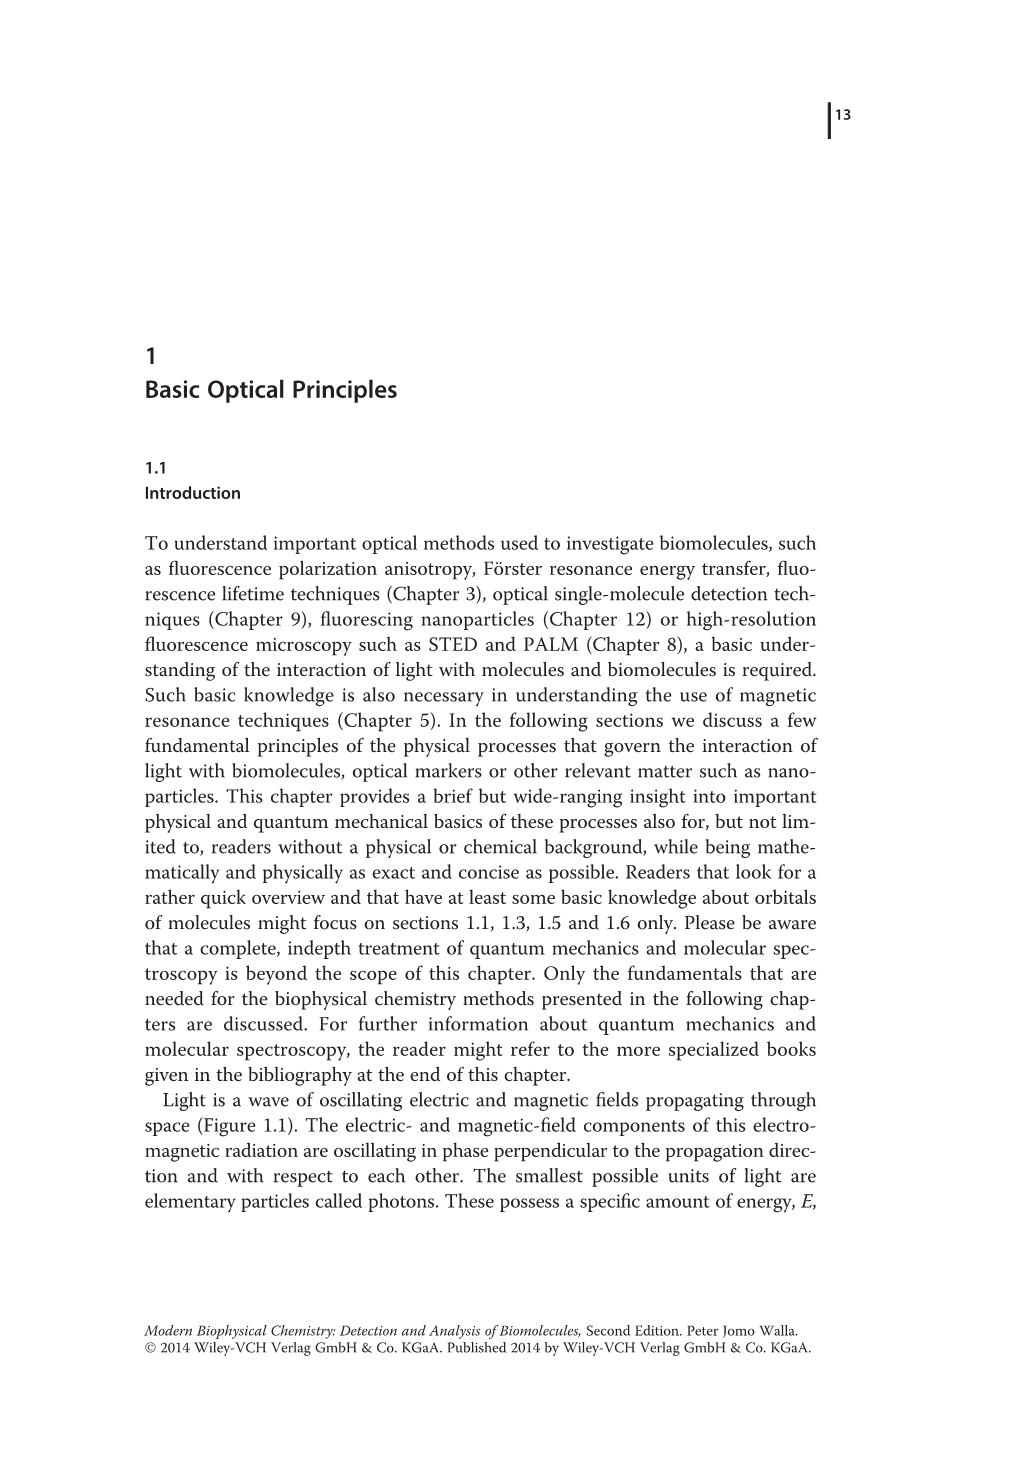 1 Basic Optical Principles